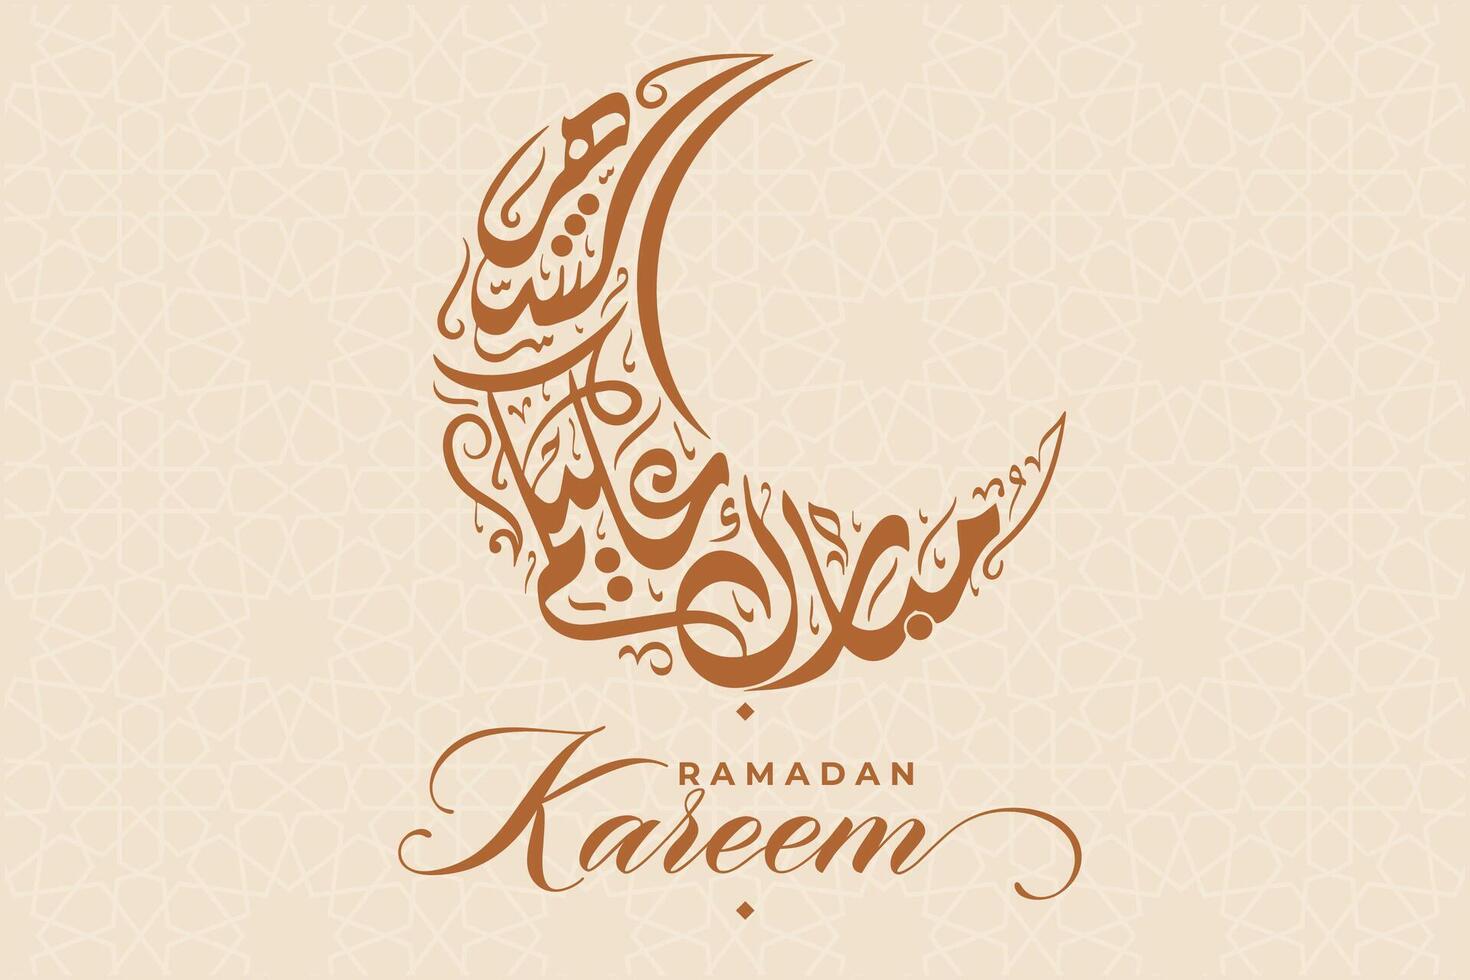 Luxurious Eid al-Fitr, Ramadhan holiday decoration greeting card vector